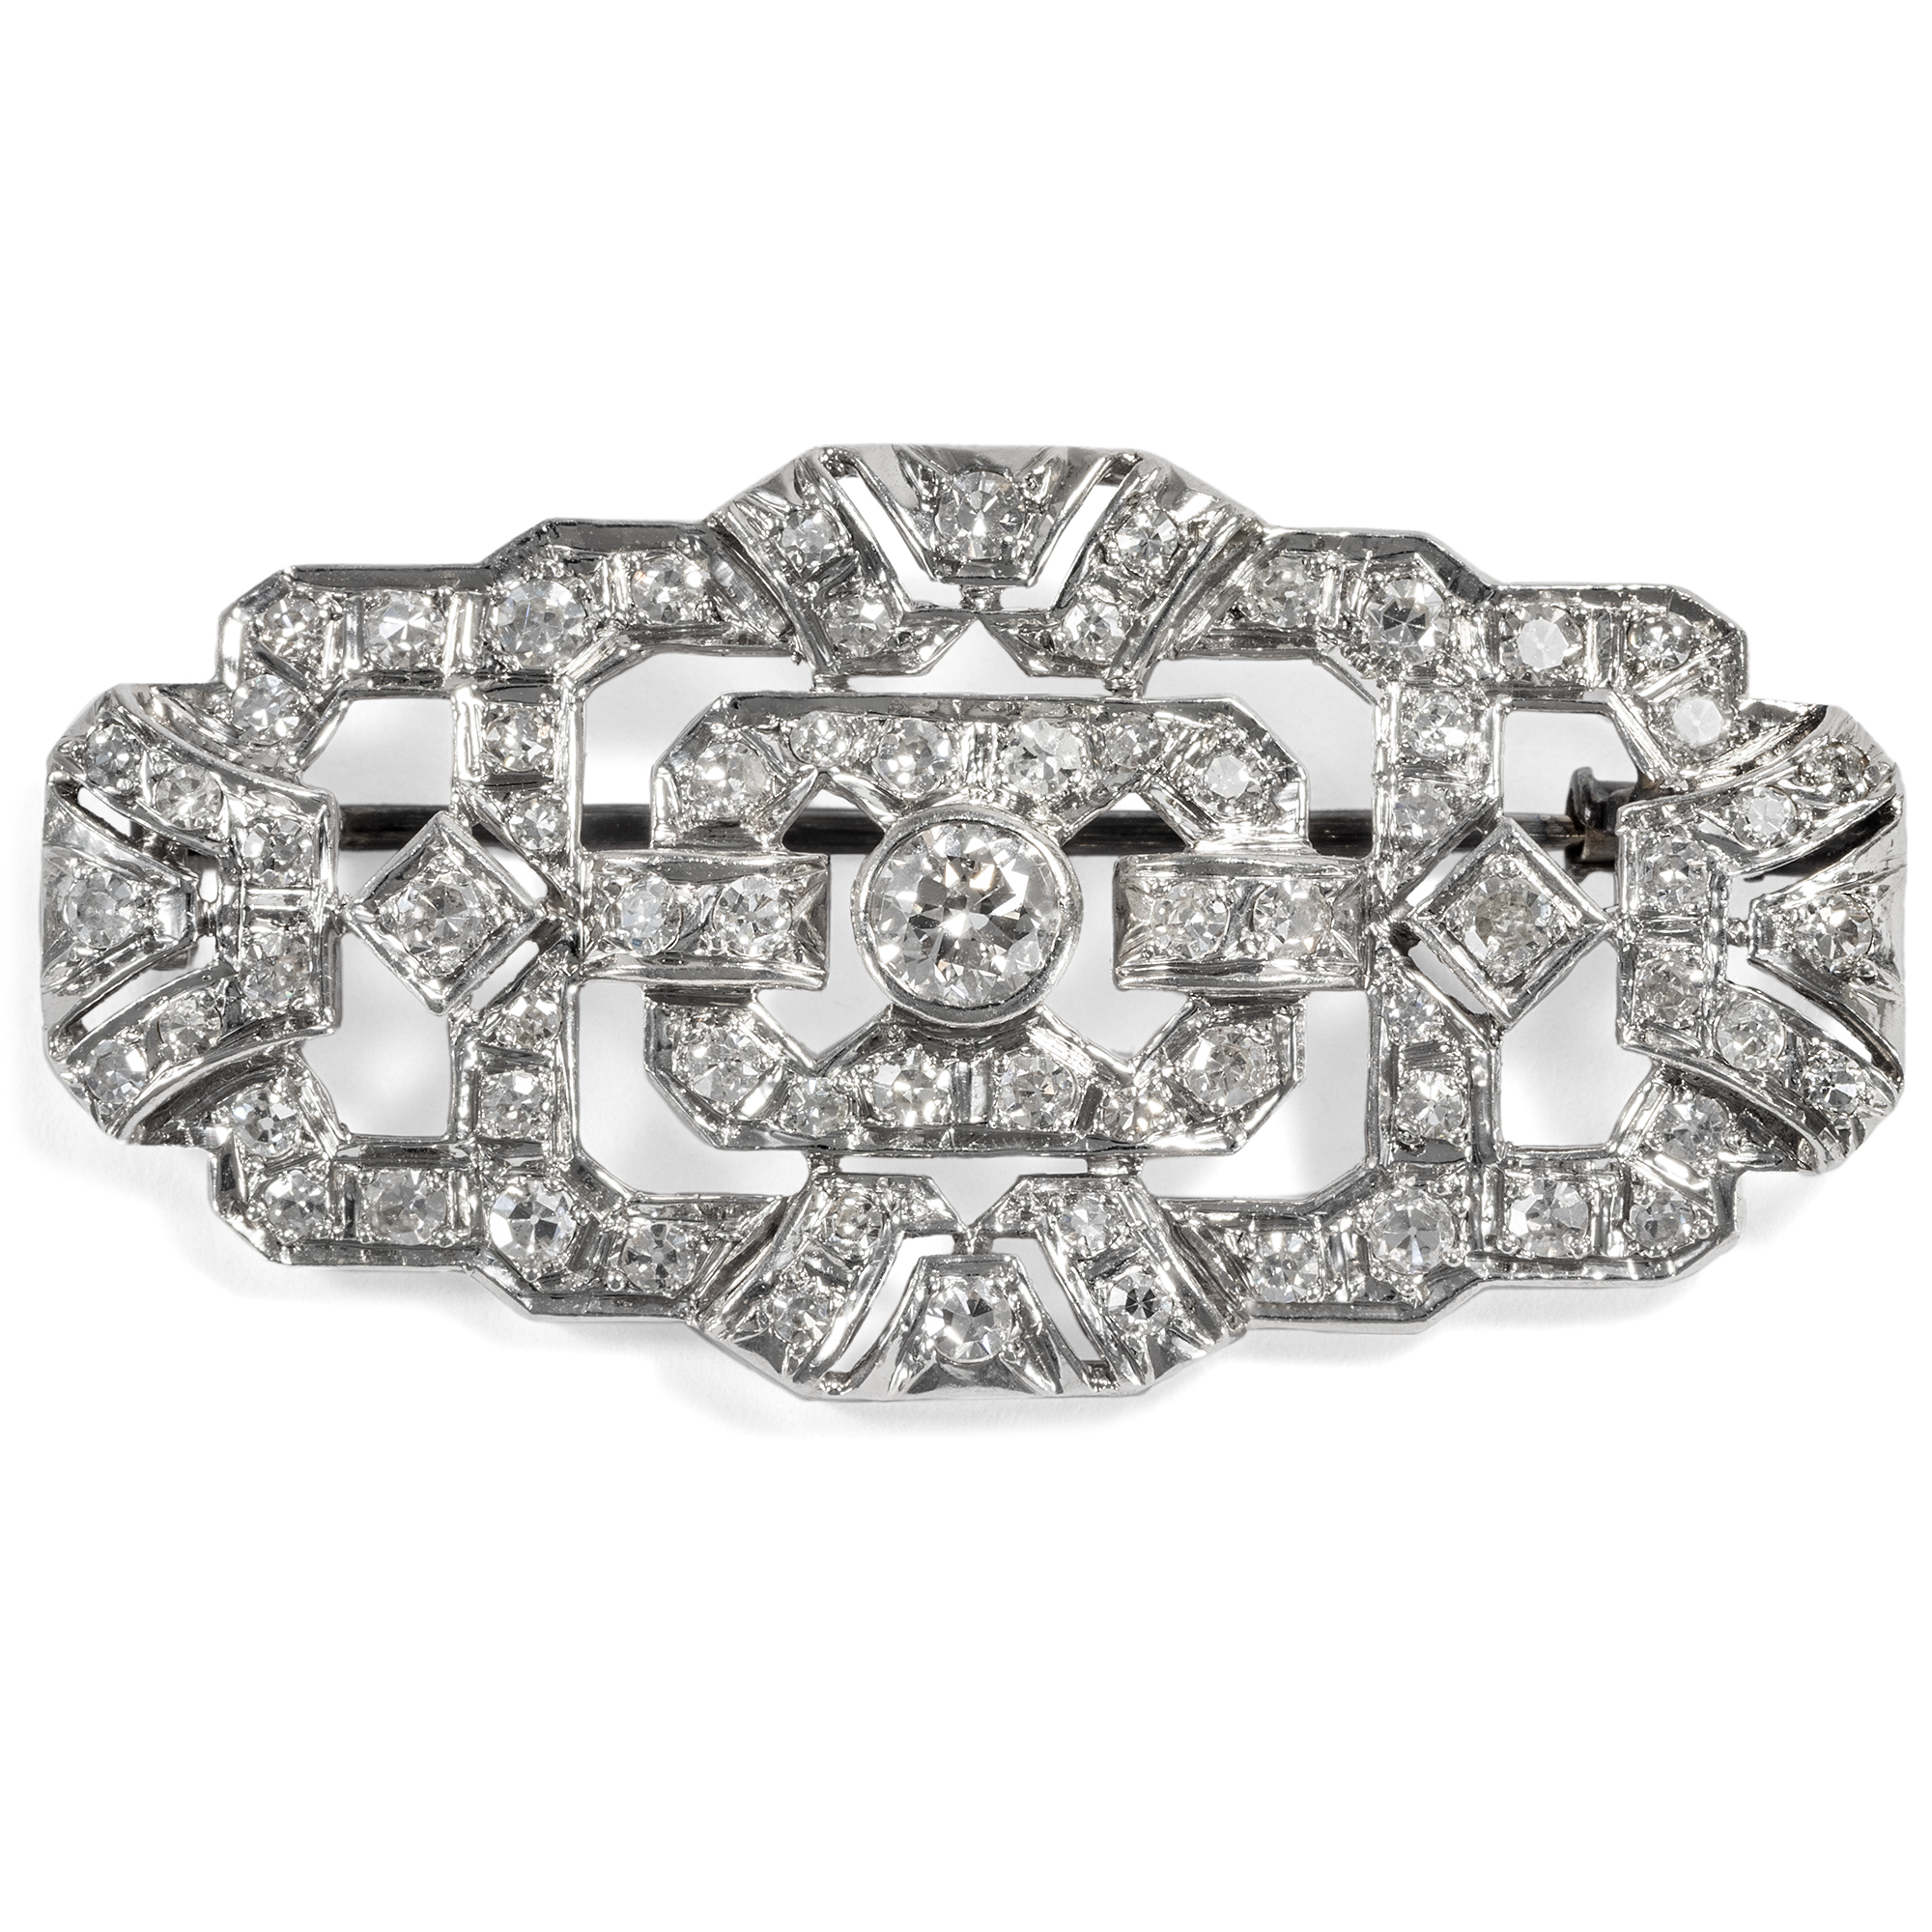 Elegant Art Deco Brooch With Diamonds